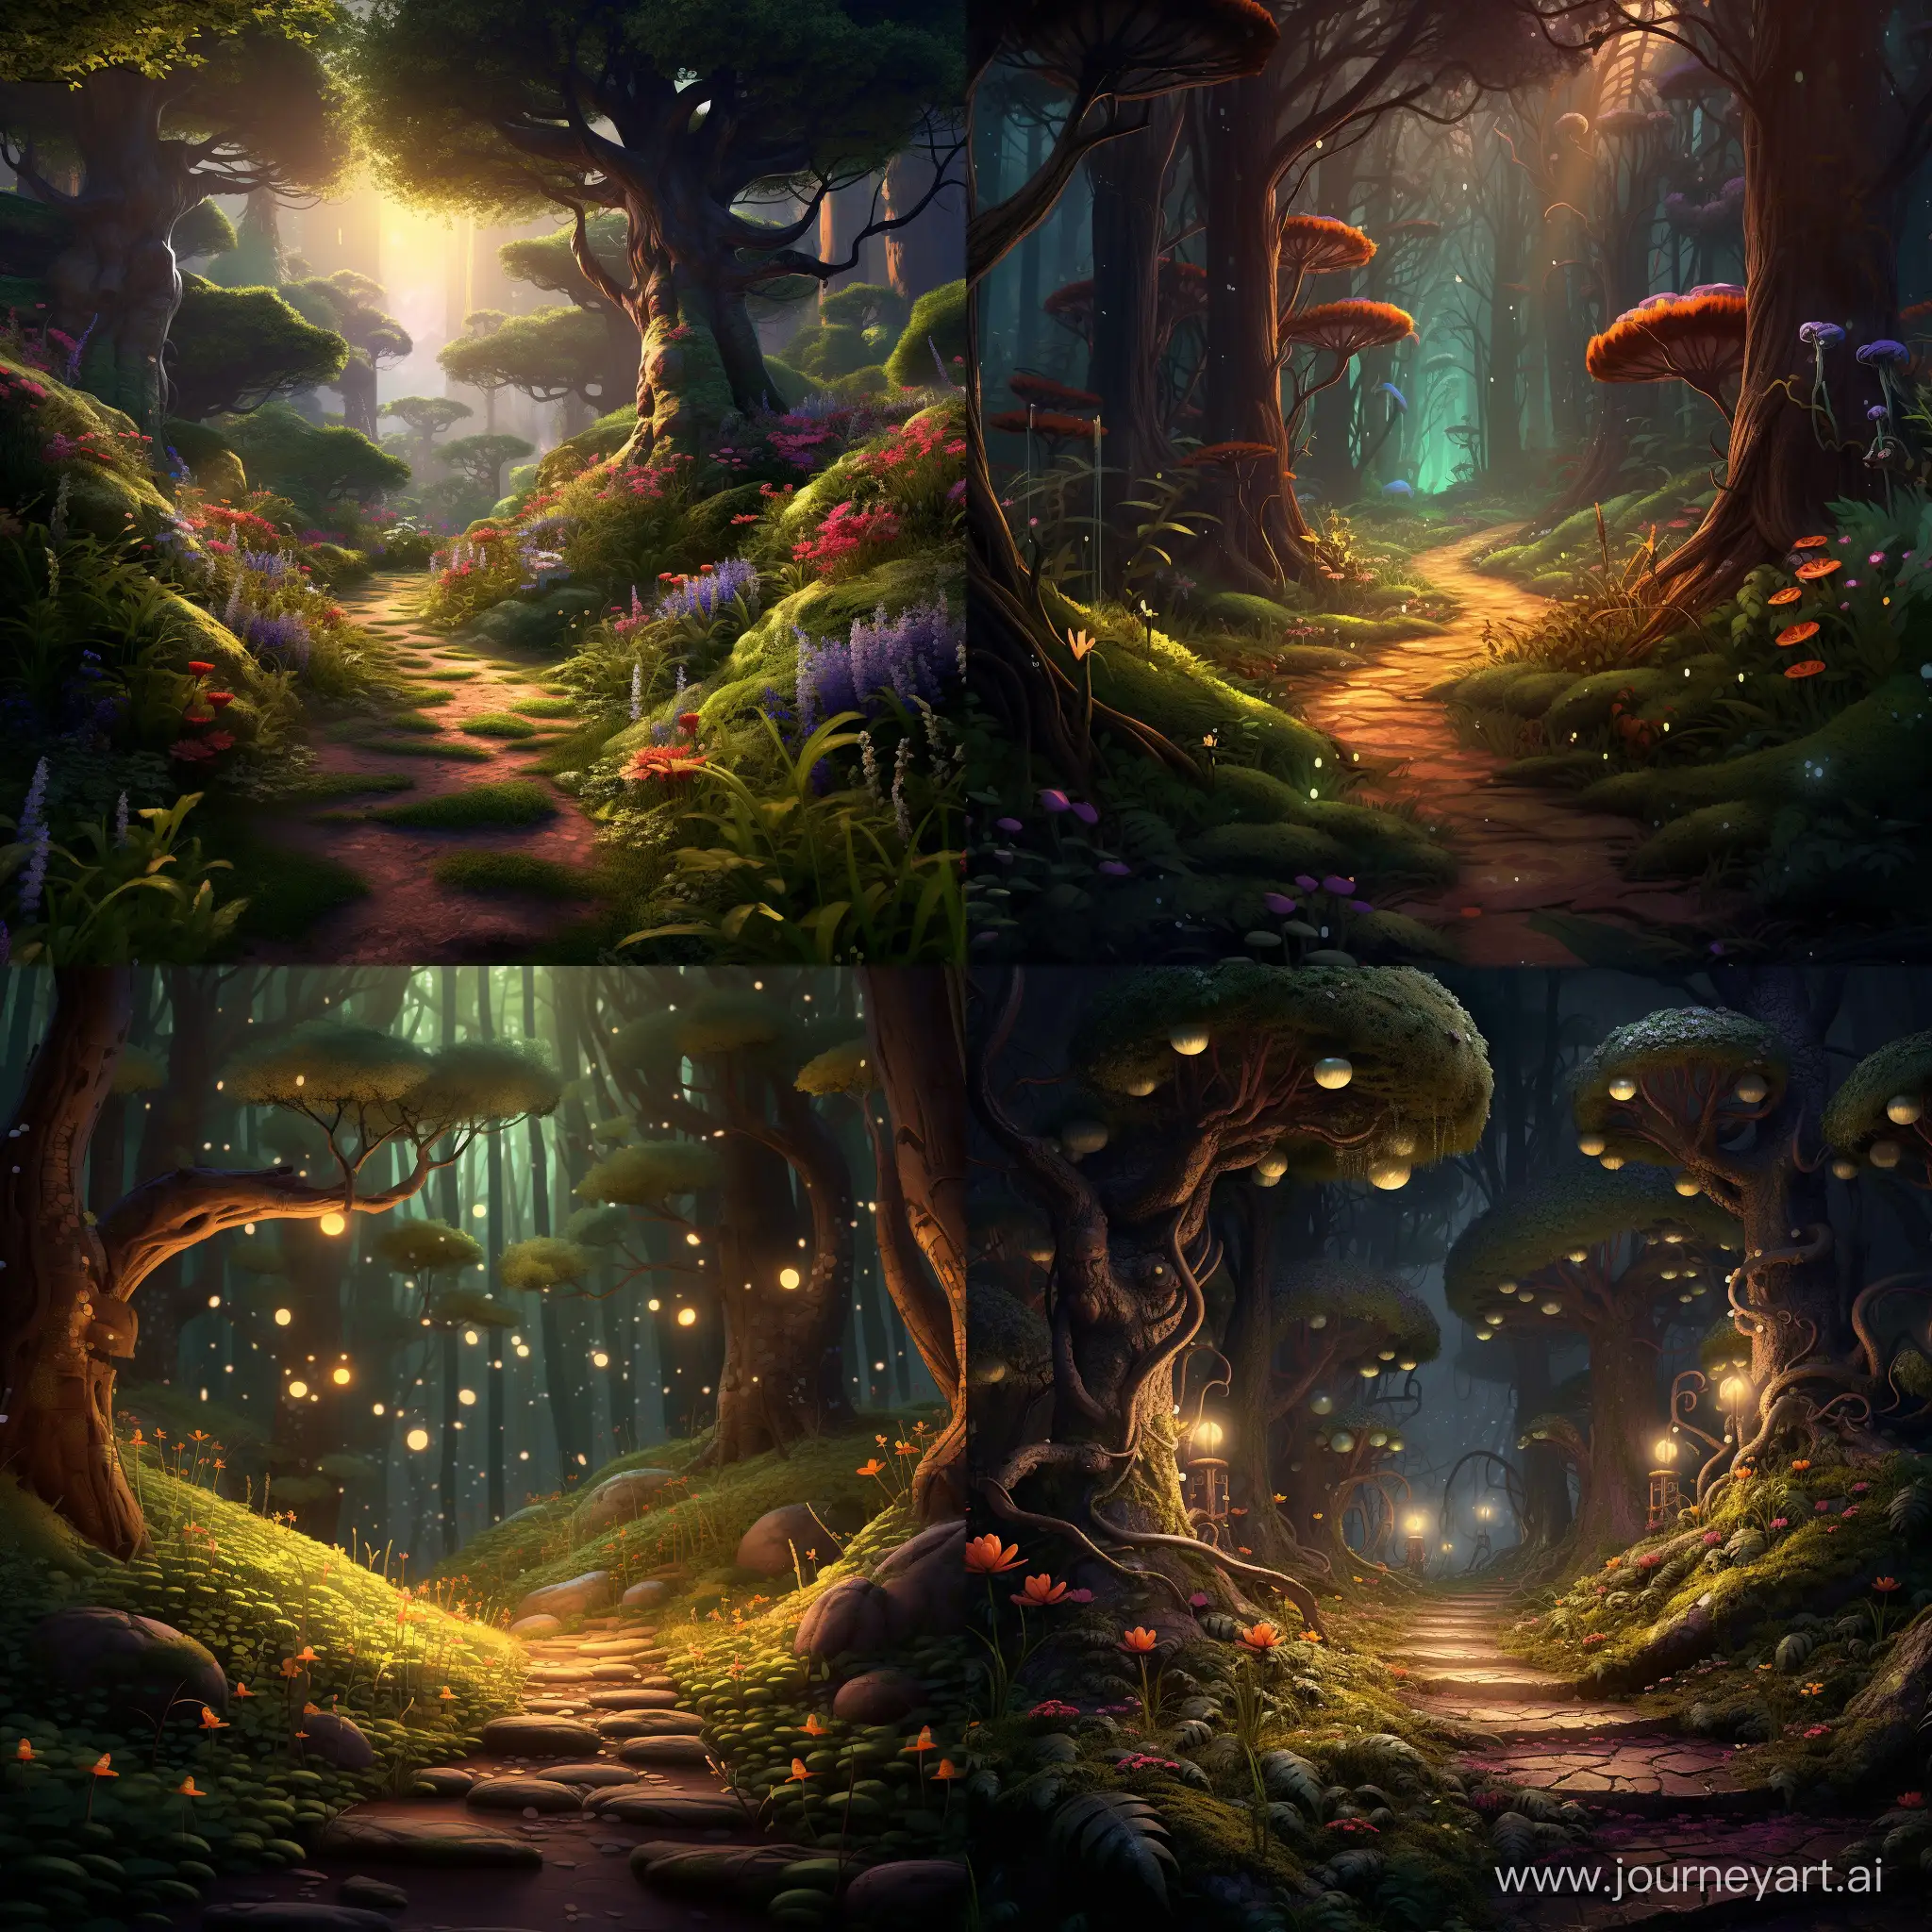 Enchanting-Magic-Forest-Scene-in-Pixar-Style